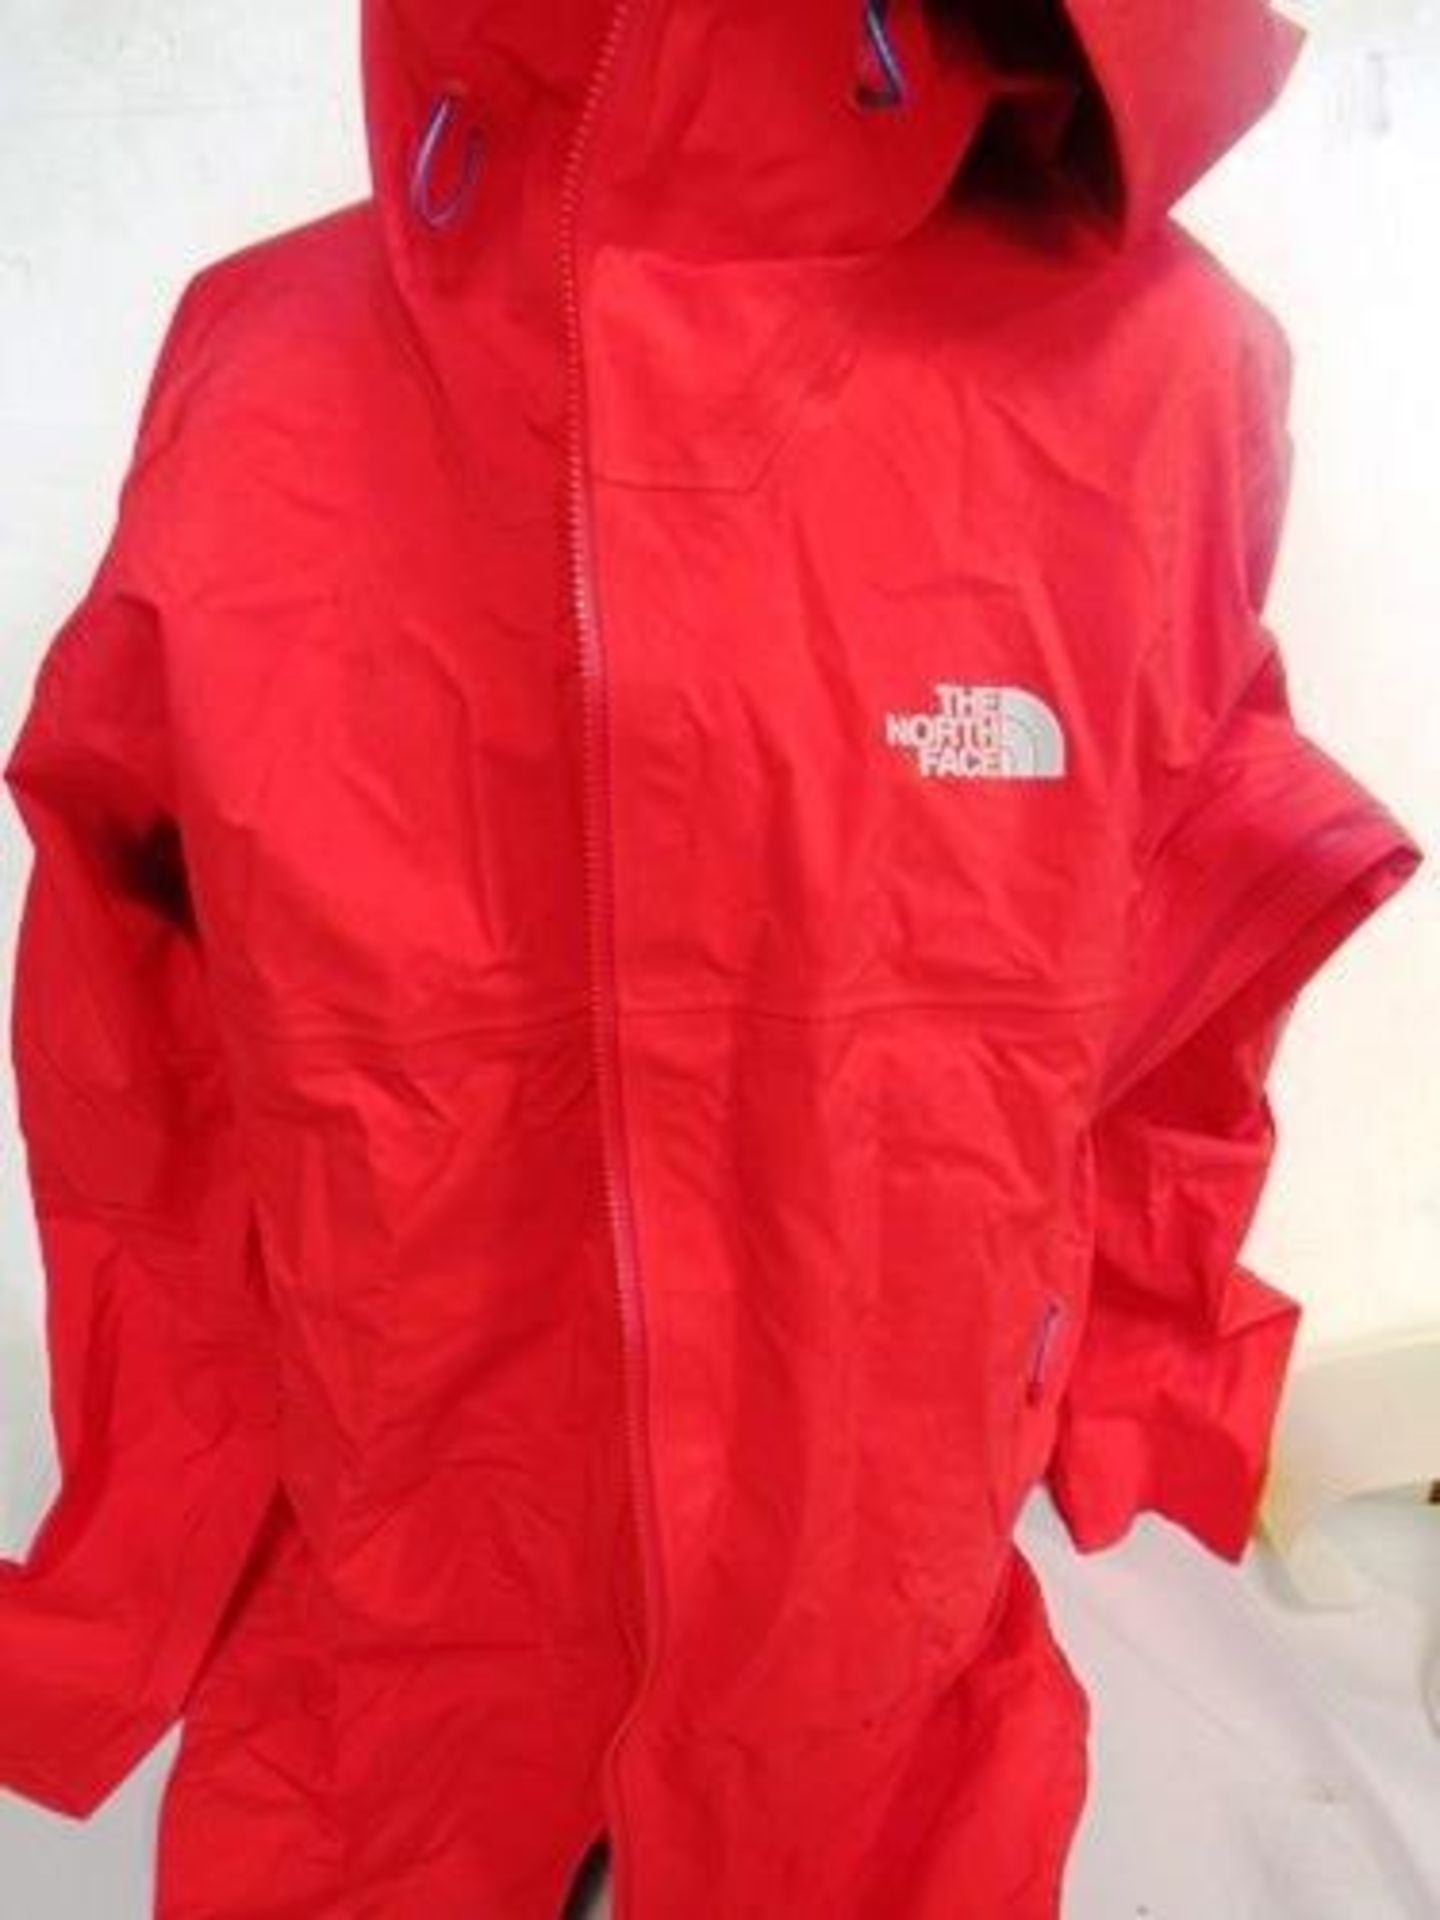 1 x men's North Face storm jacket, size L - New, no tags (ES17C) - Image 2 of 2